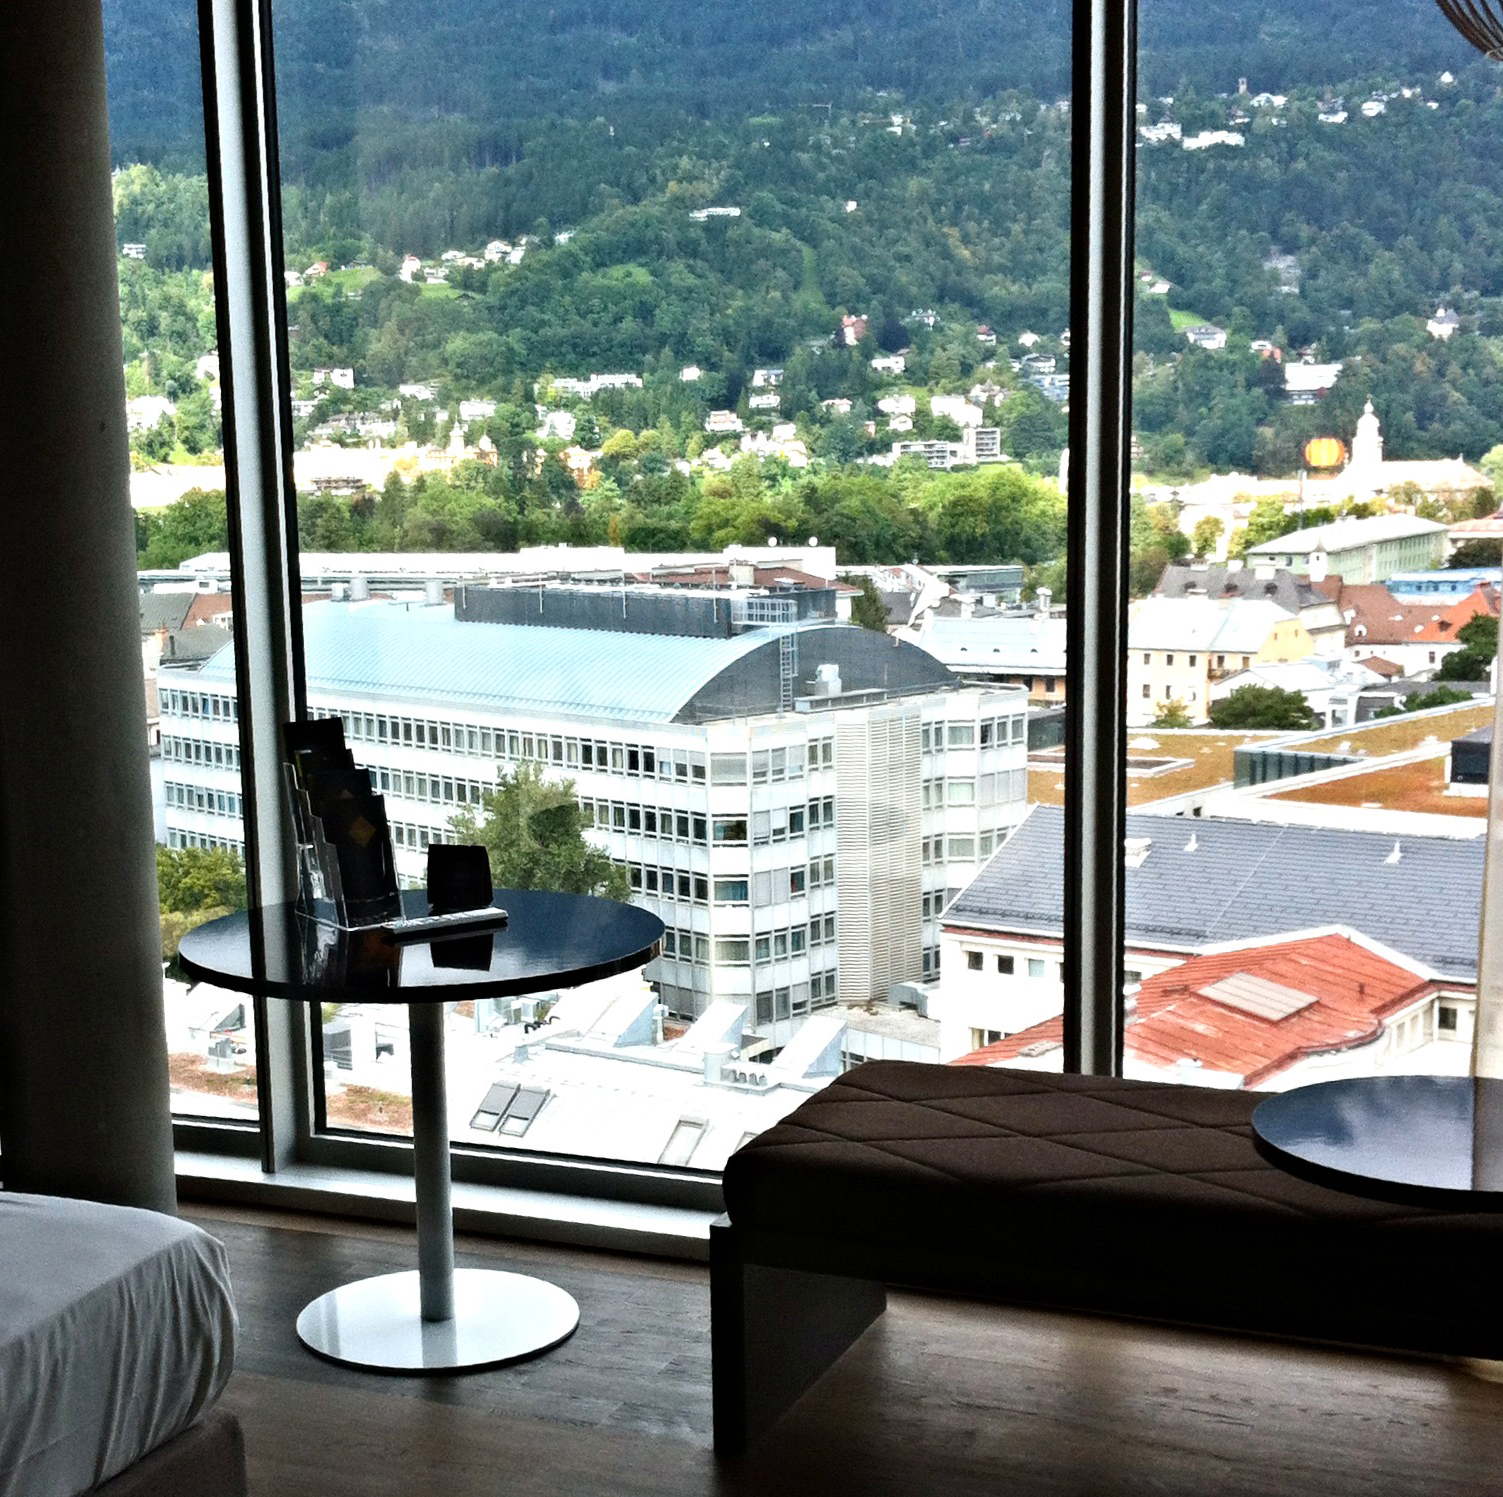 aDLERS Hotel, Innsbruck, Design, Austria, Hotel